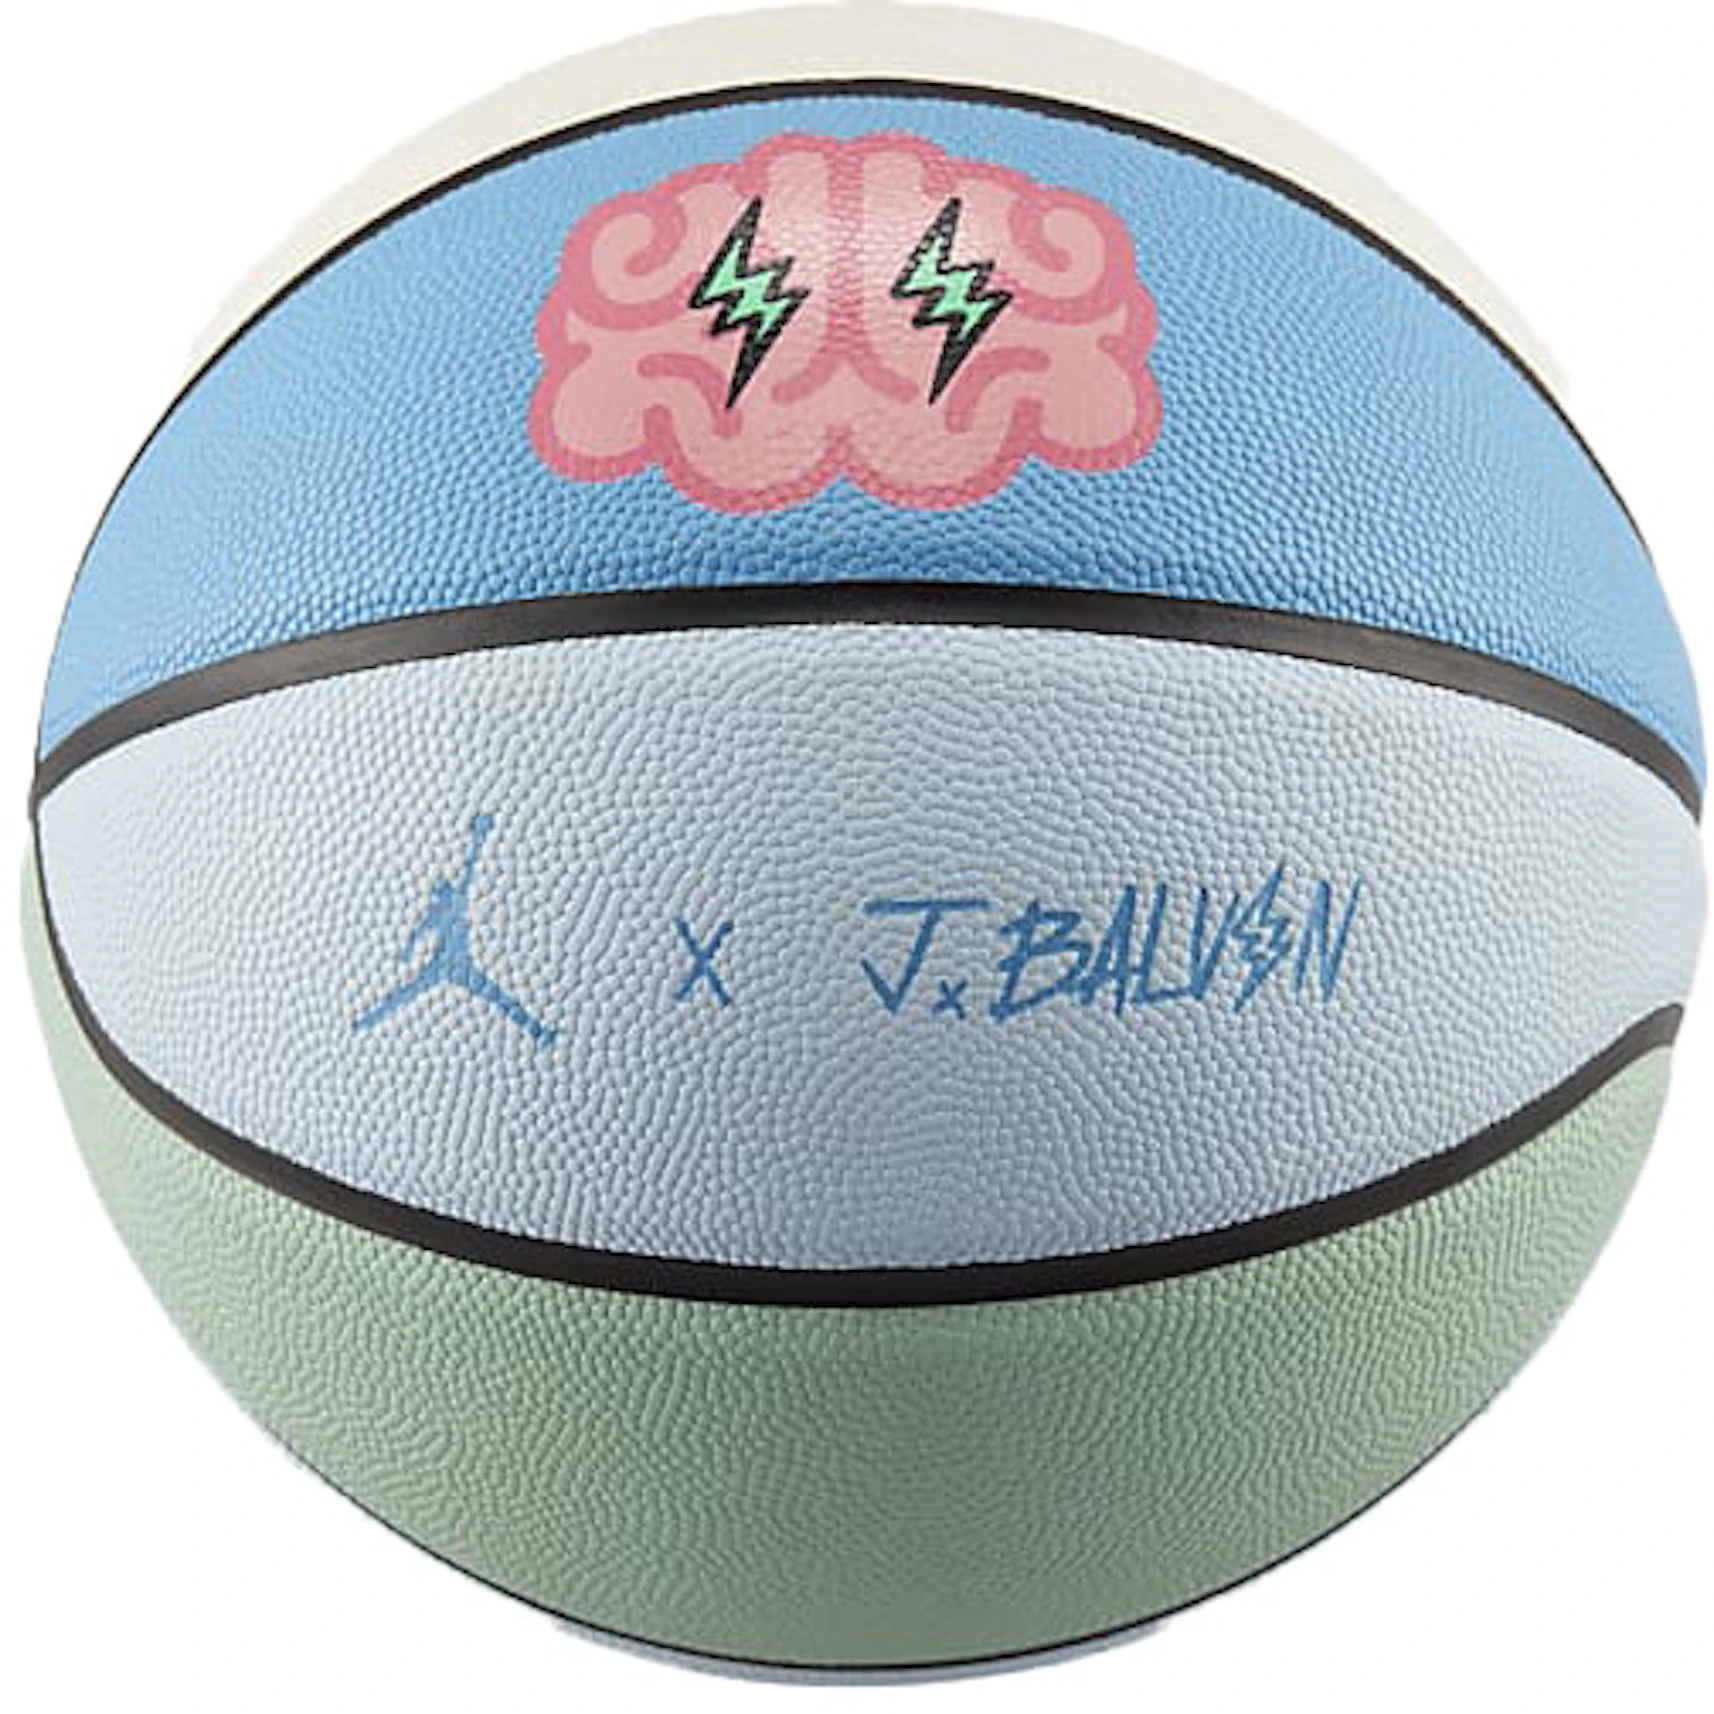 Jordan x JBalvin Everyday Court Basketball